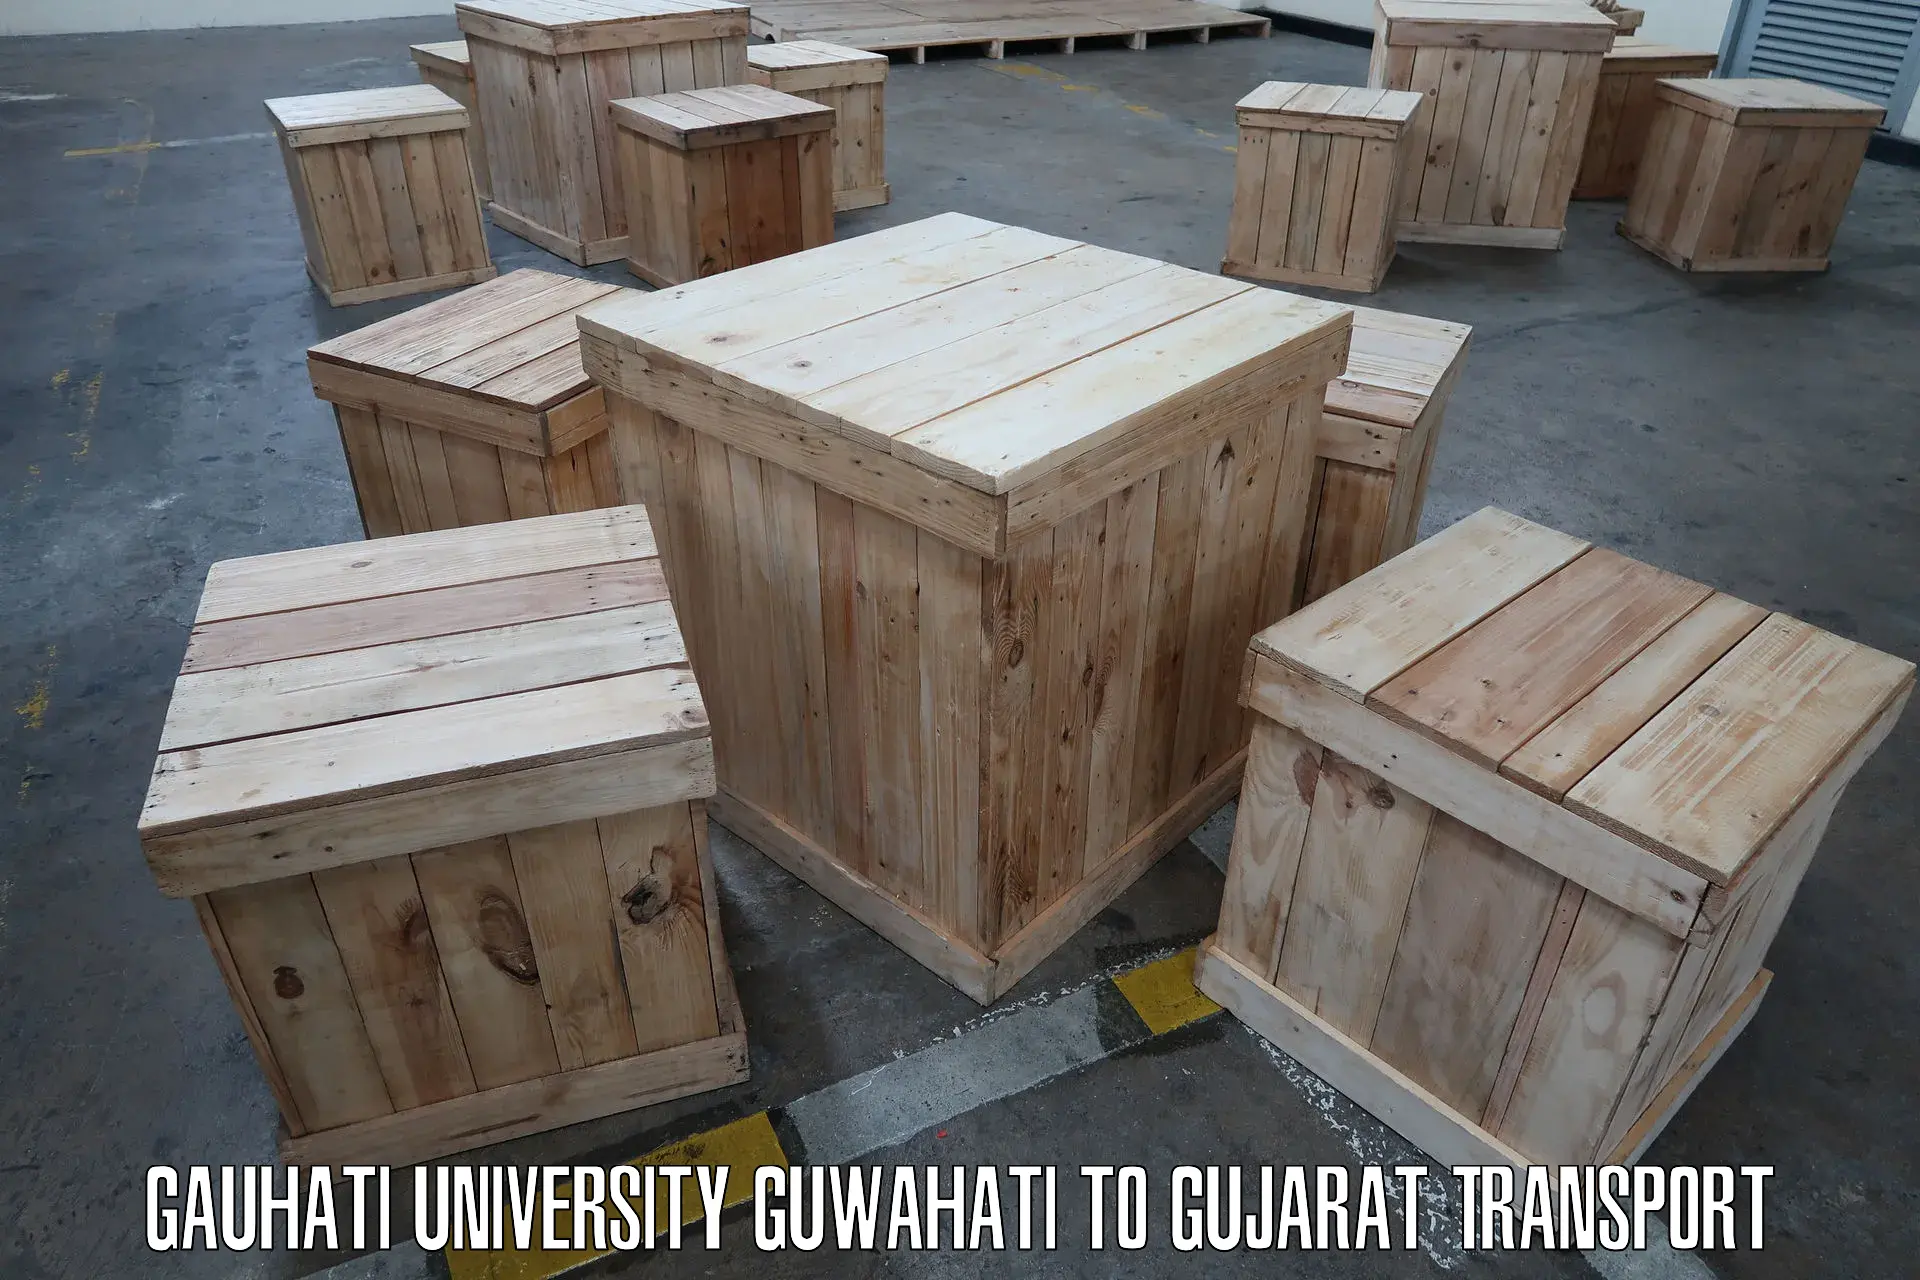 Truck transport companies in India Gauhati University Guwahati to GIDC